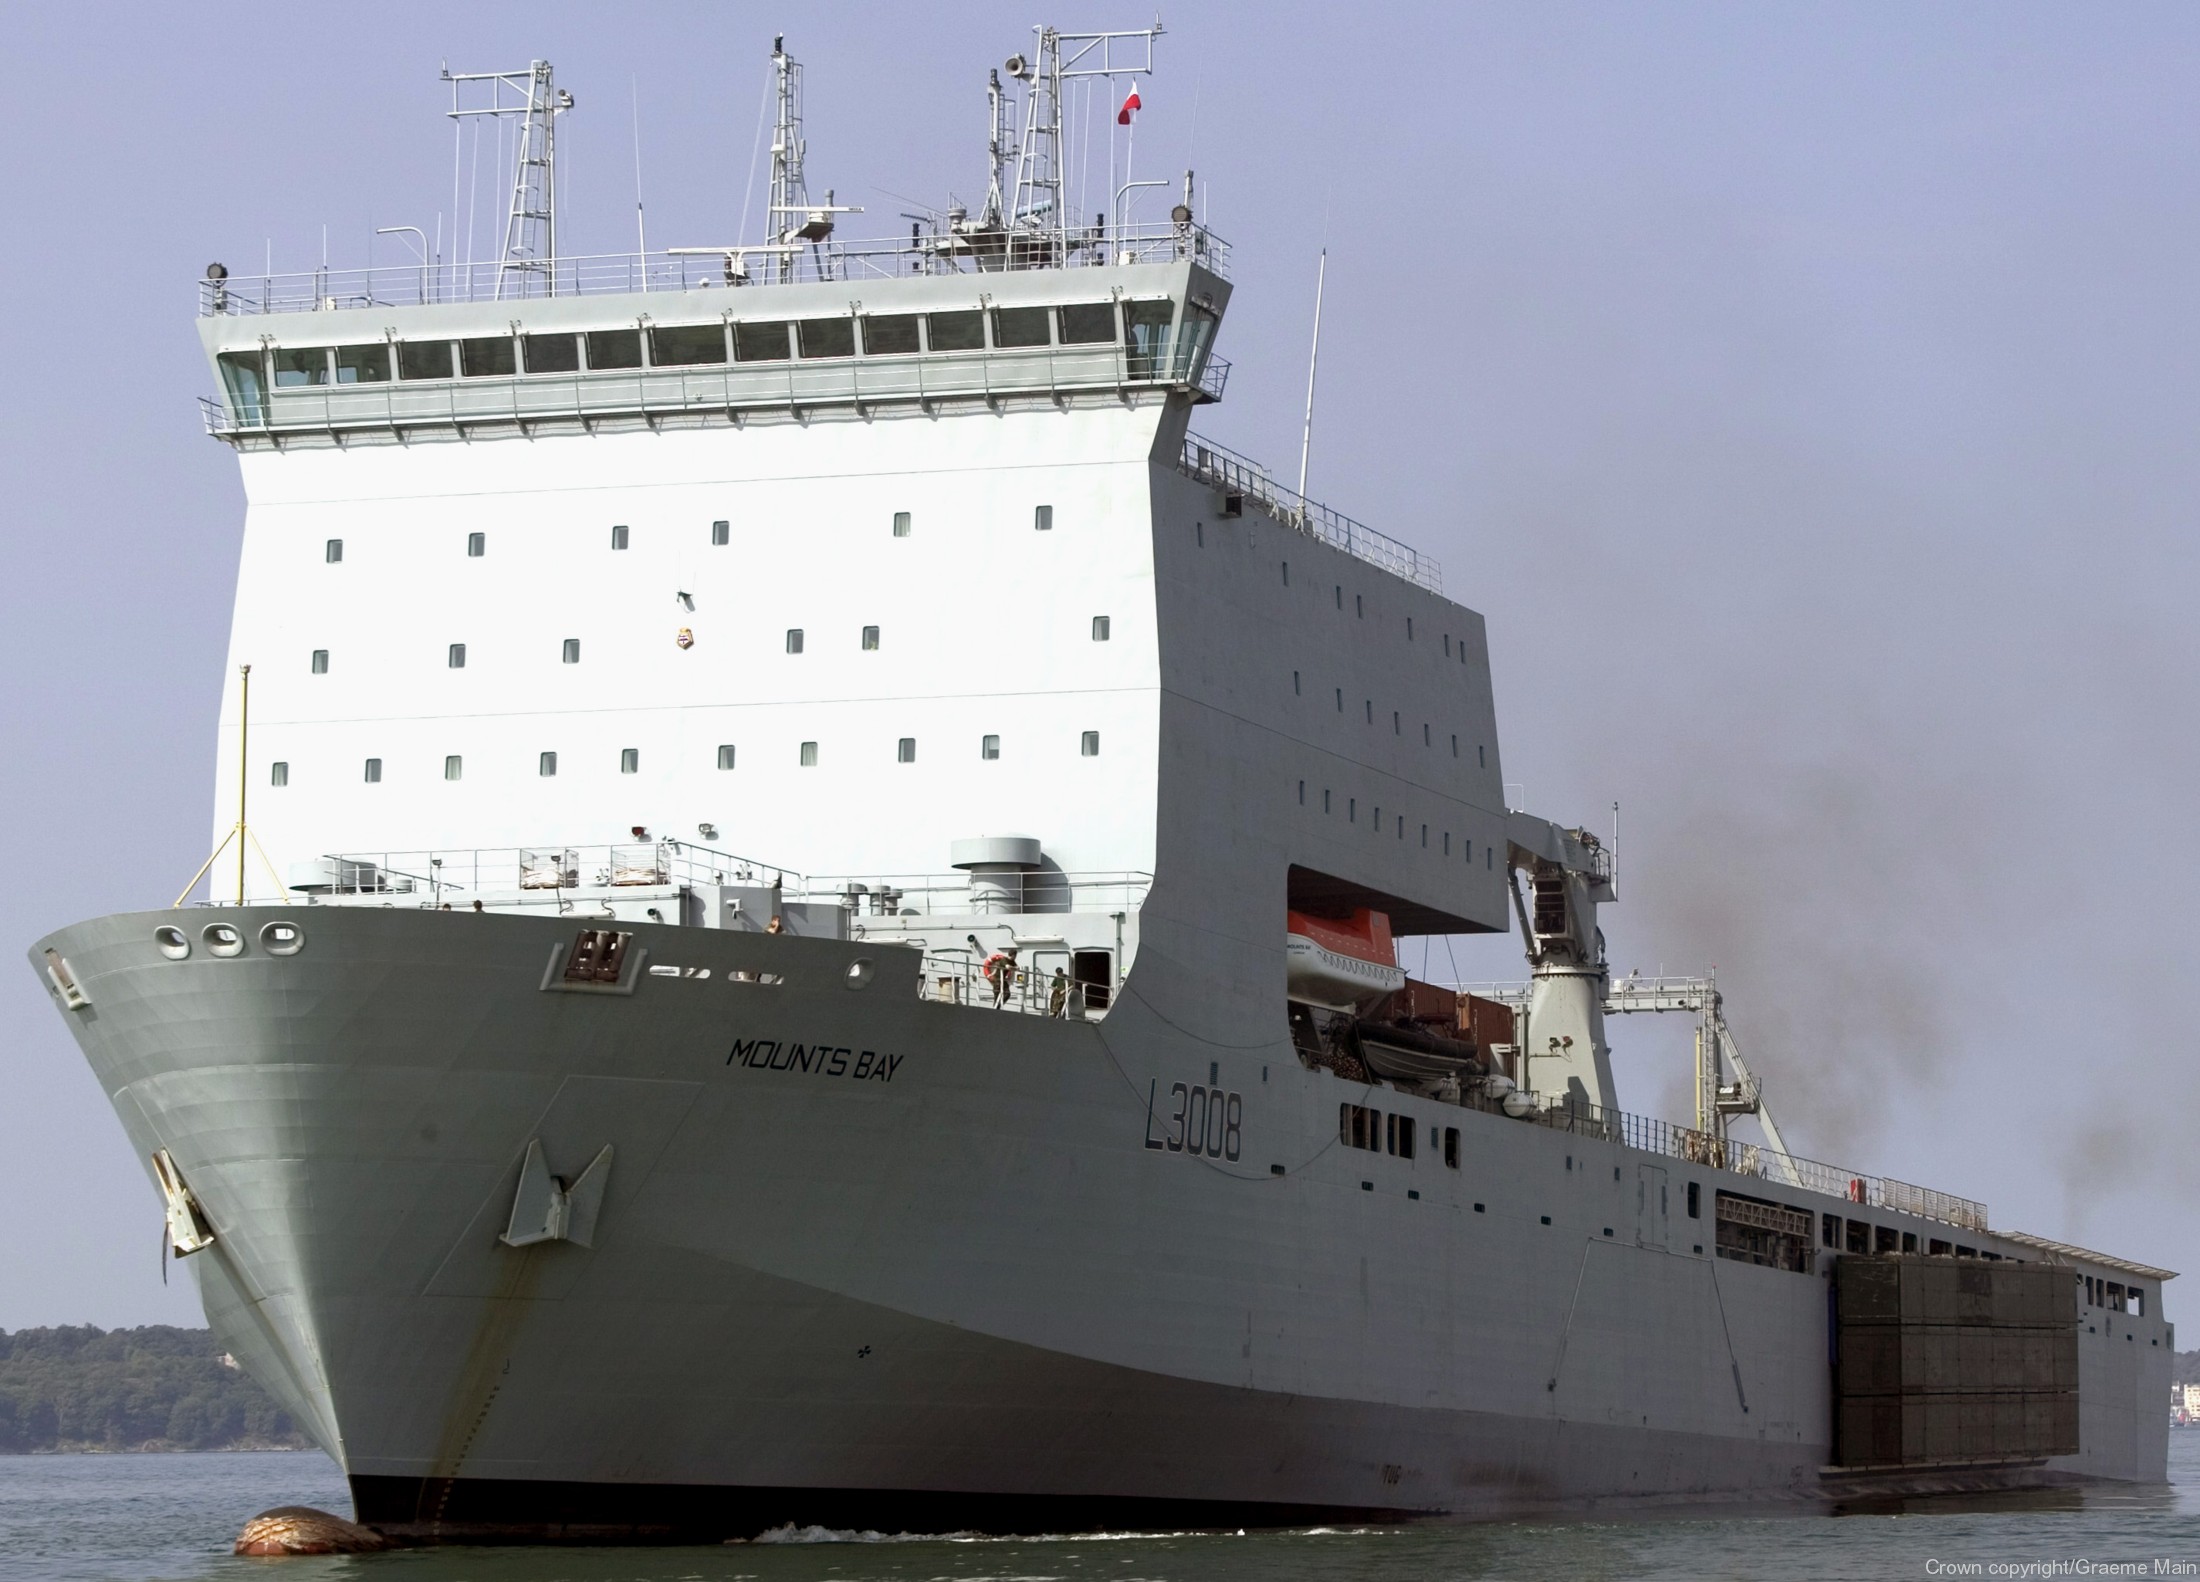 l-3008 rfa mounts bay dock landing ship lsd royal fleet auxilary navy 05